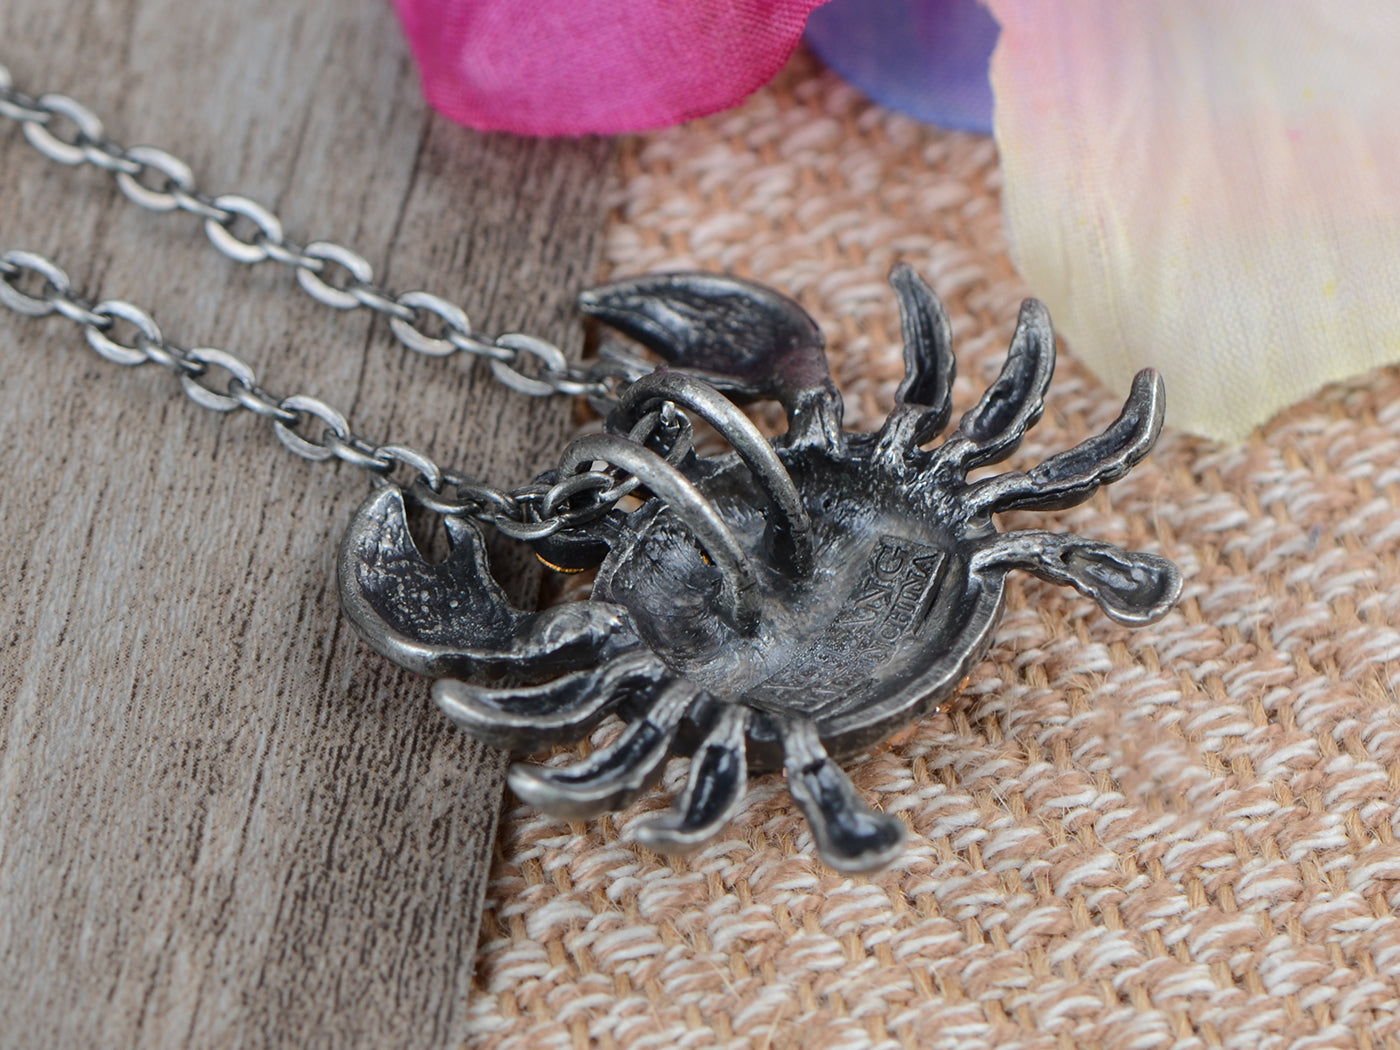 Aurora Boreallis Sea Crab Pendant Necklace